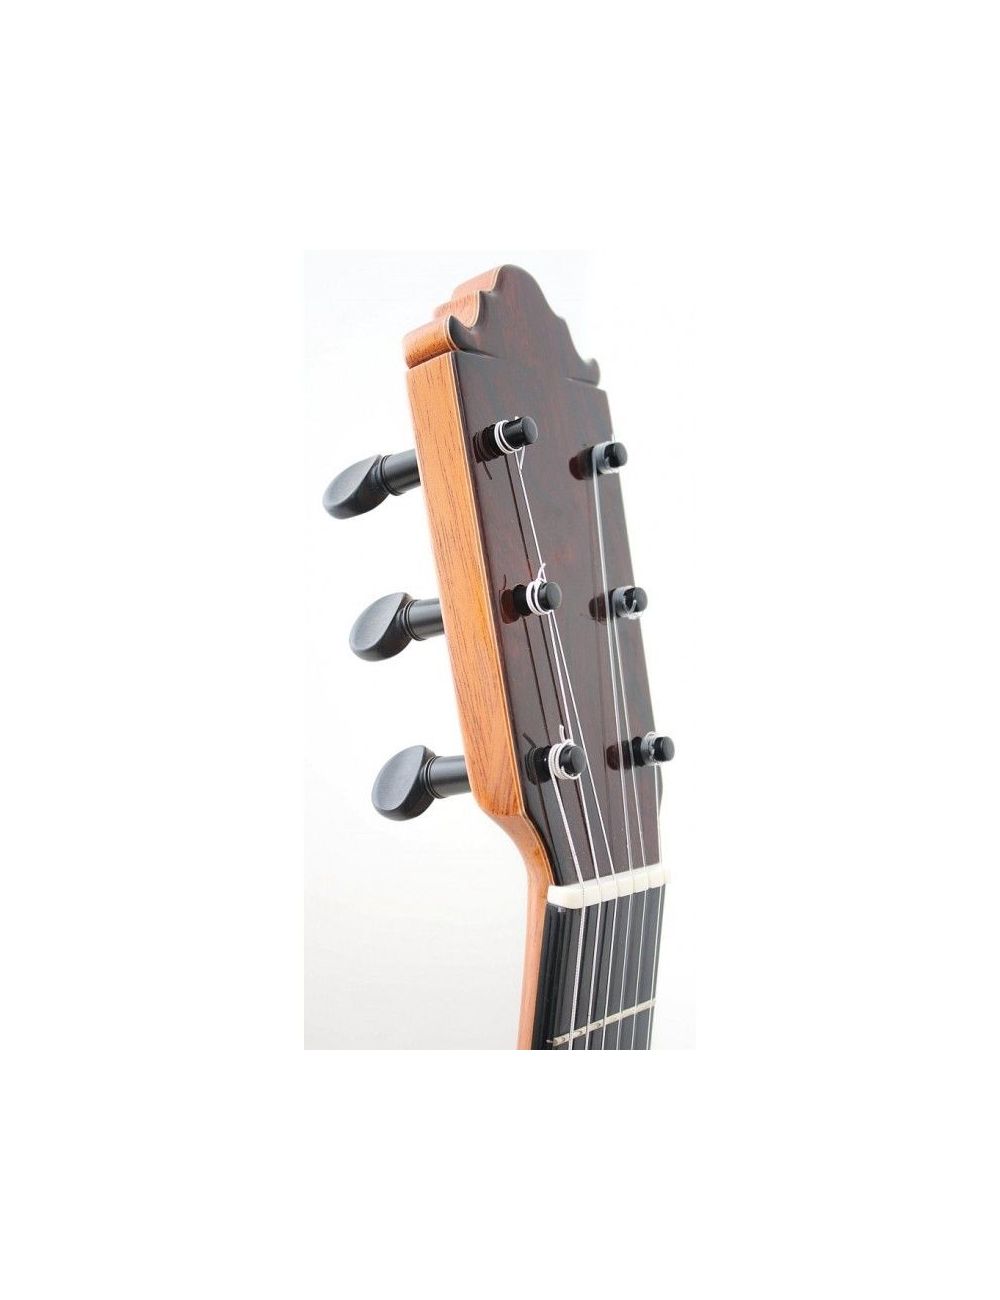 PEGHEADS 945-E 9mm Gitarre Mechaniken